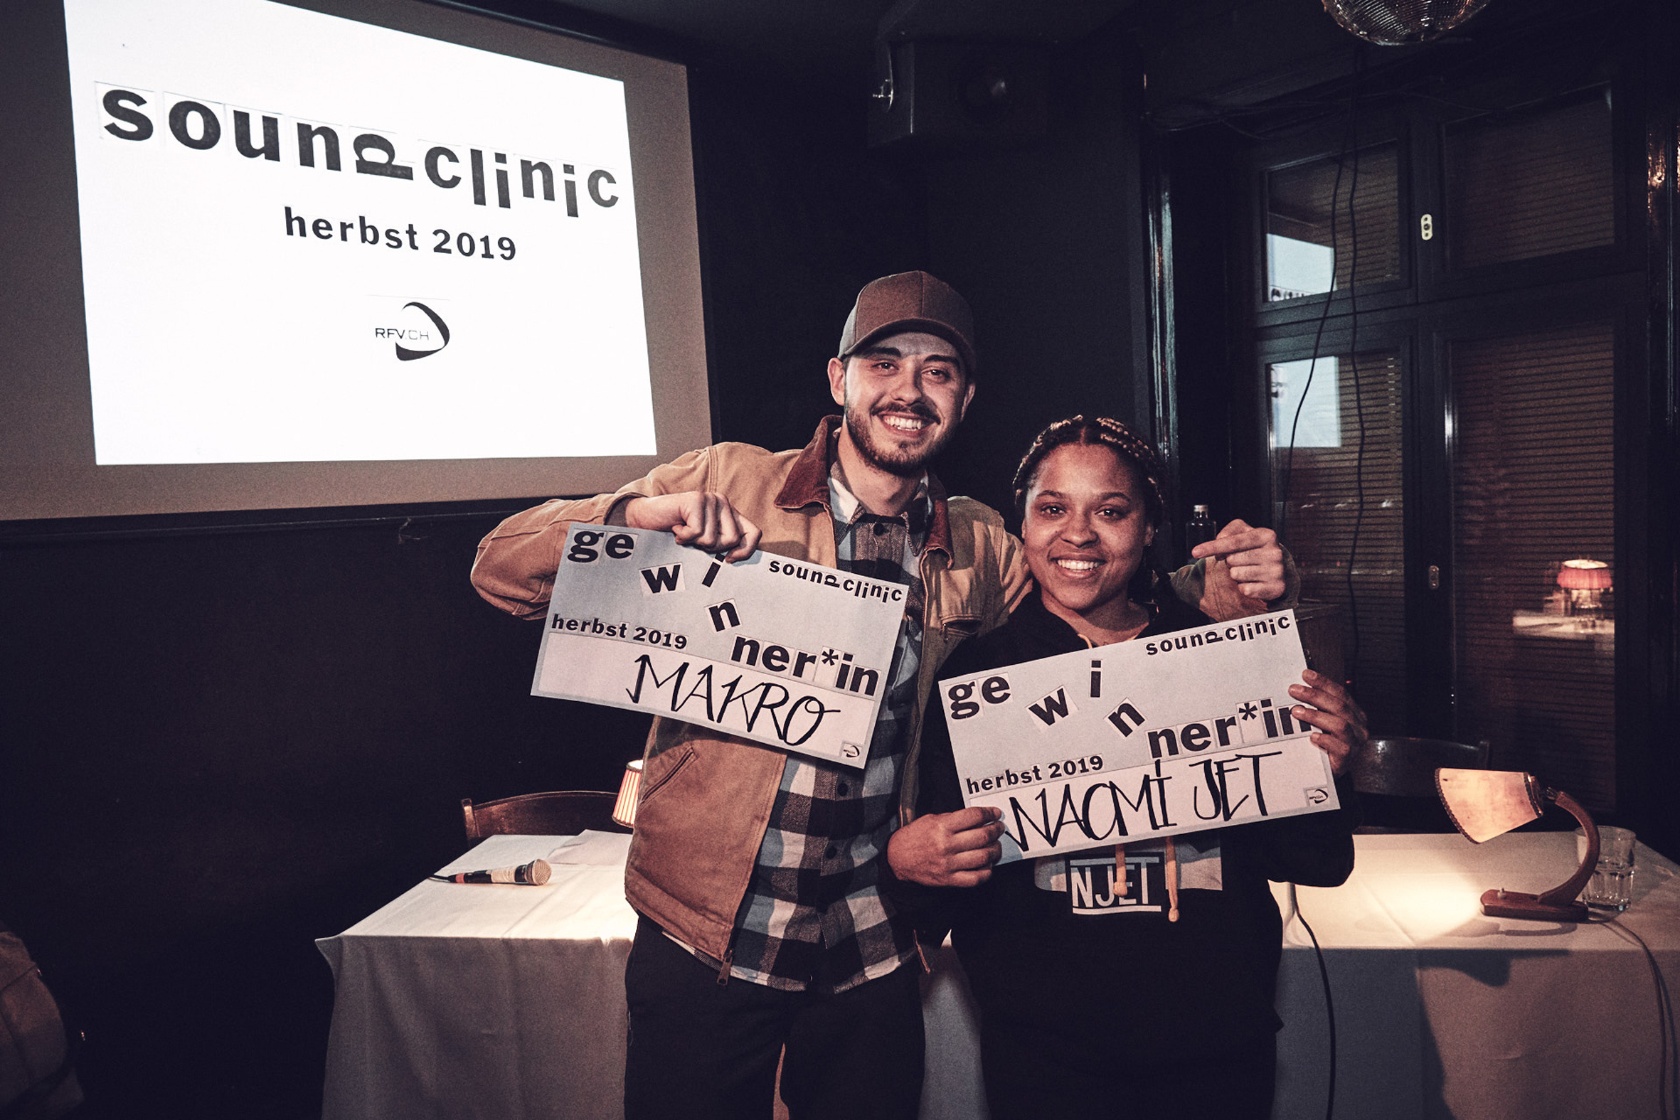 Soundclinic Herbst 2019: Gewinner*innen Makro und Naomi Jet © Stefan Rüst